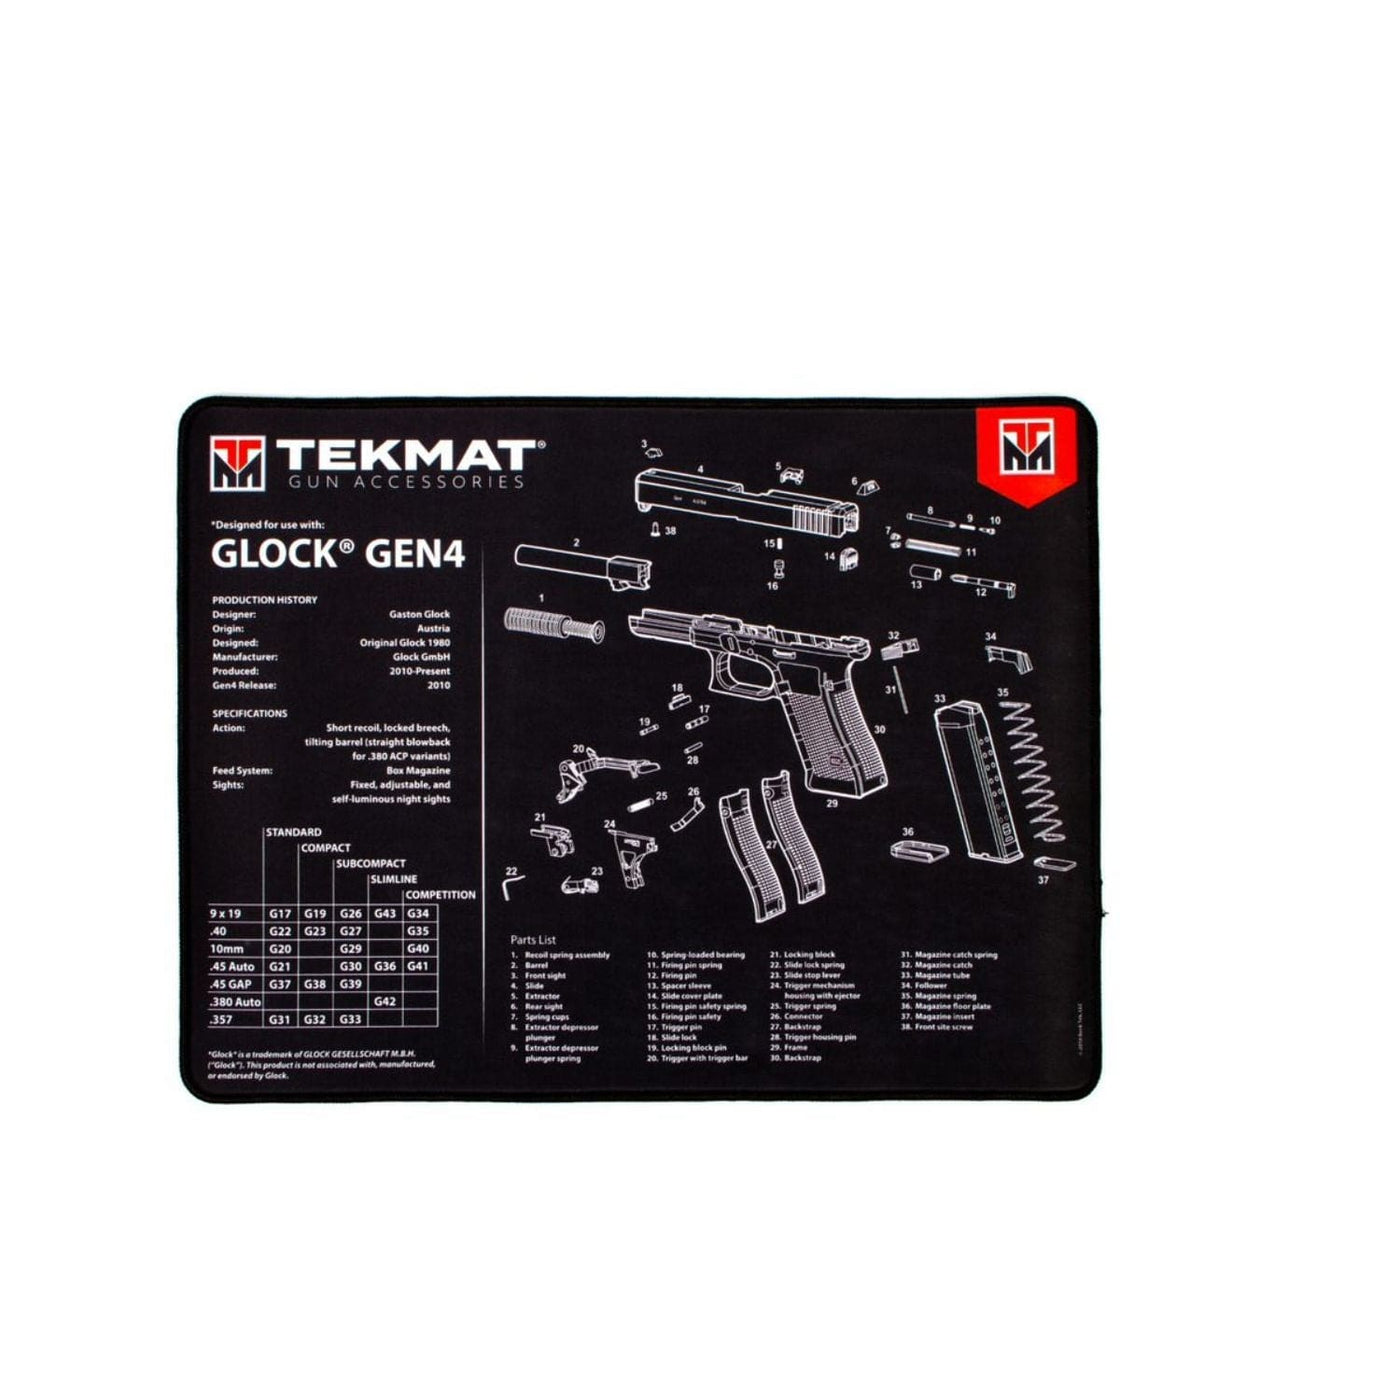 TekMat TekMat Ultra 20 Glock G4 Gun Cleaning Mat Shooting